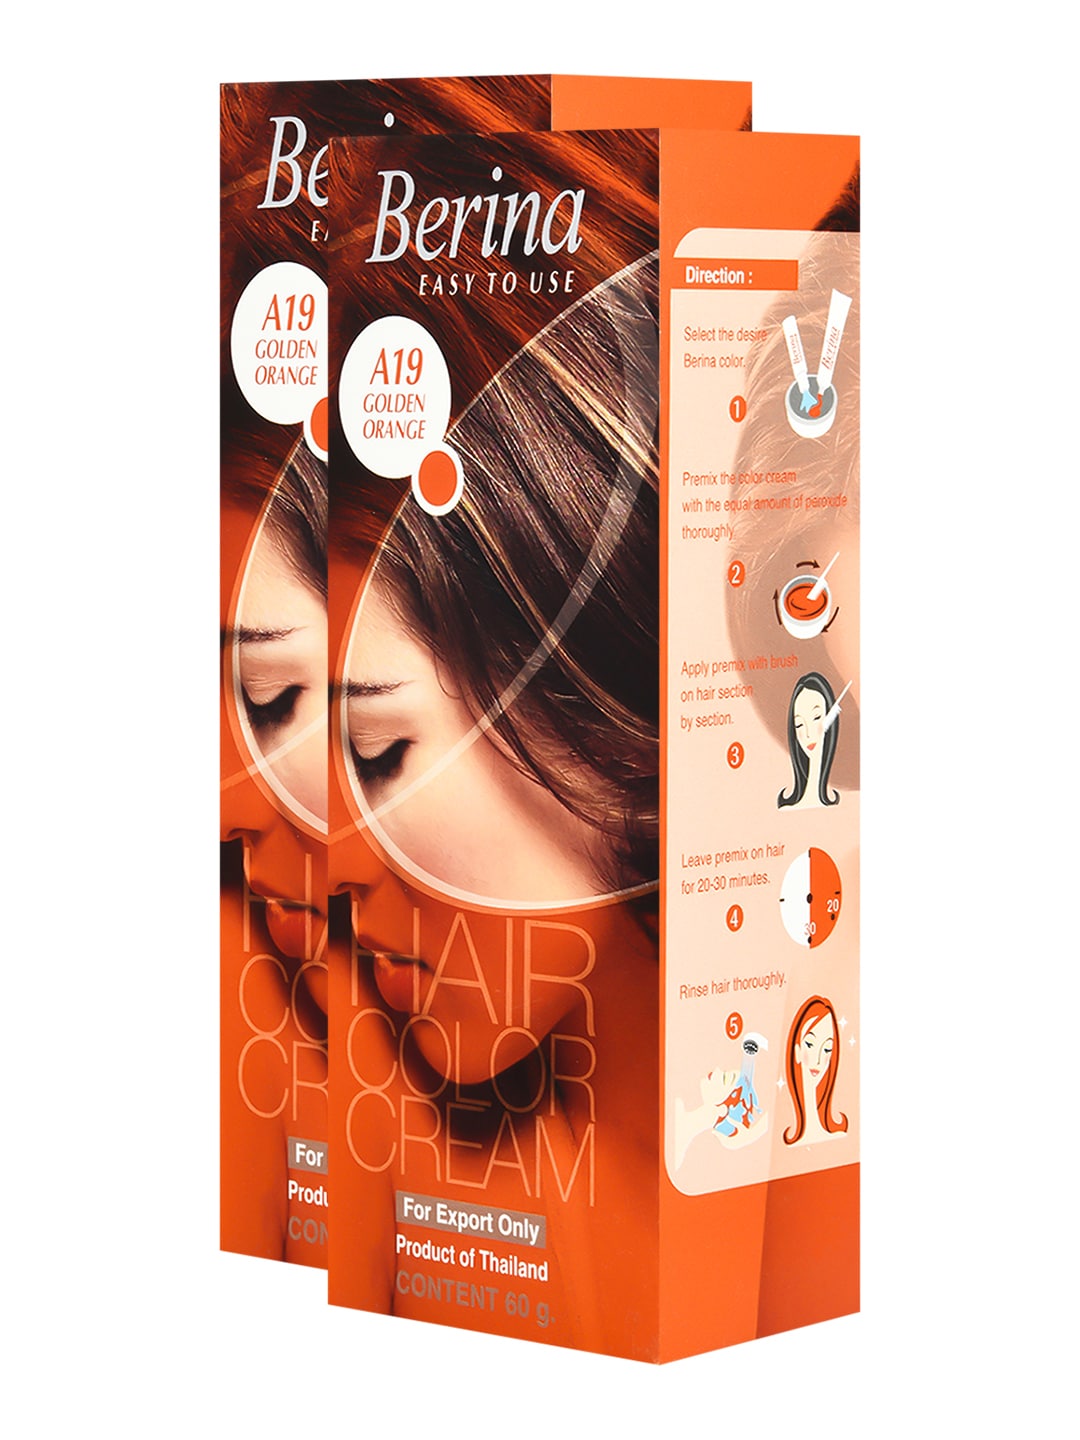 Berina Pack of 2 A19 Golden Orange Hair Color Cream - 60gm Each Price in India